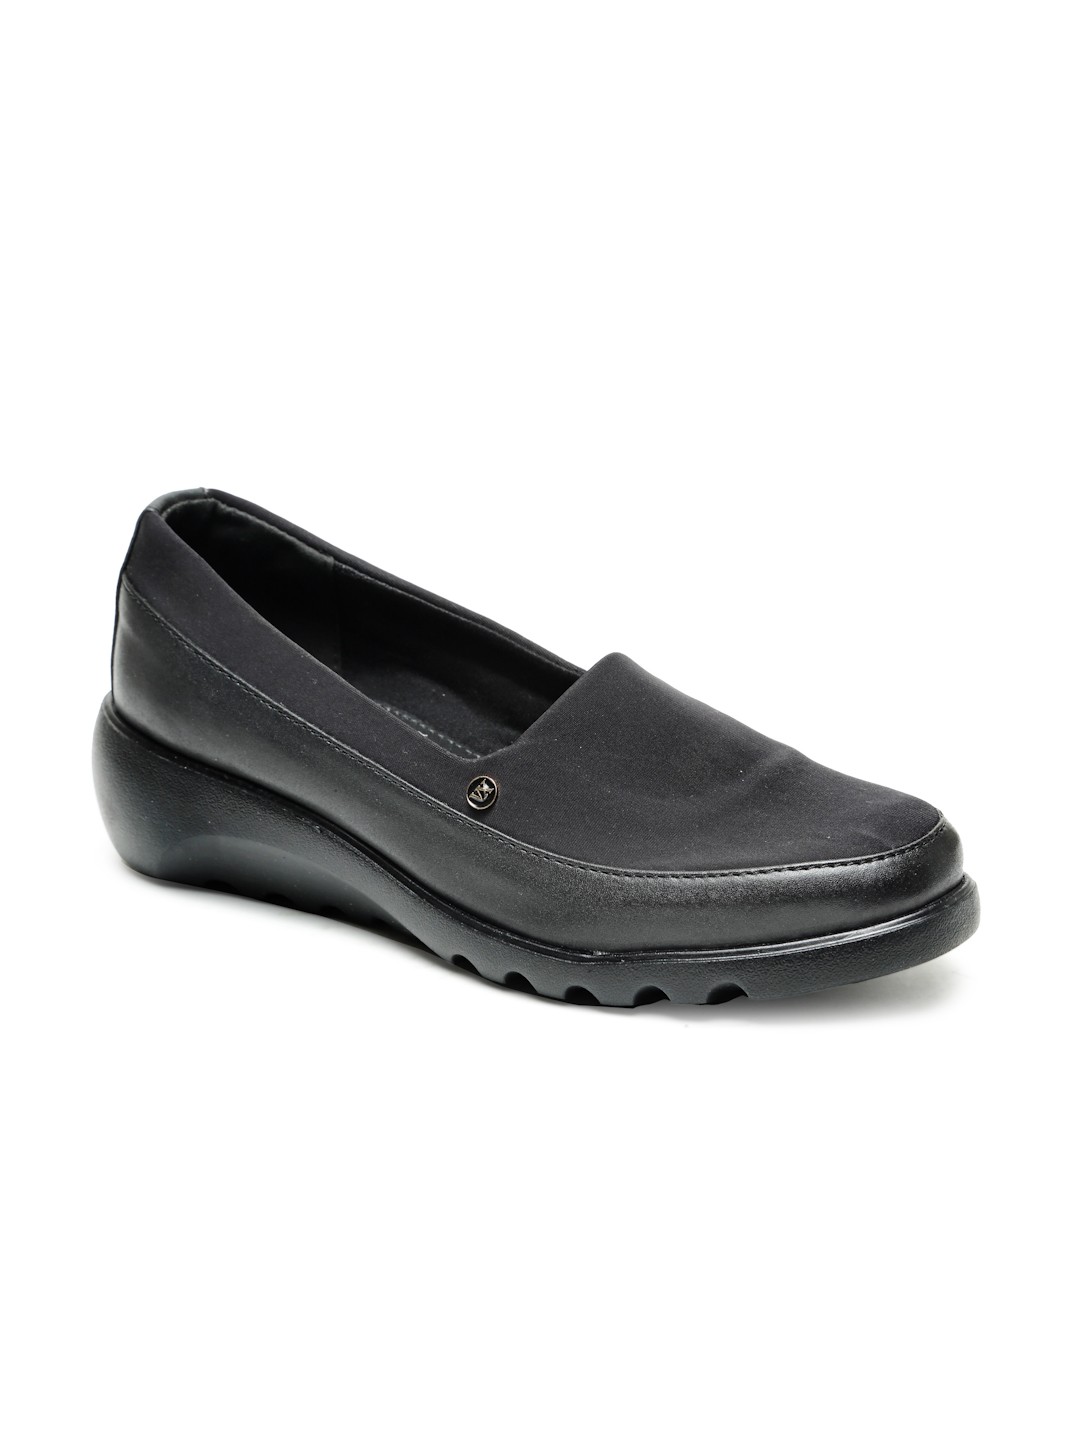 Buy Von Wellx Germany Comfort Women's Black Casual Shoes Elsa Online in Kanpur